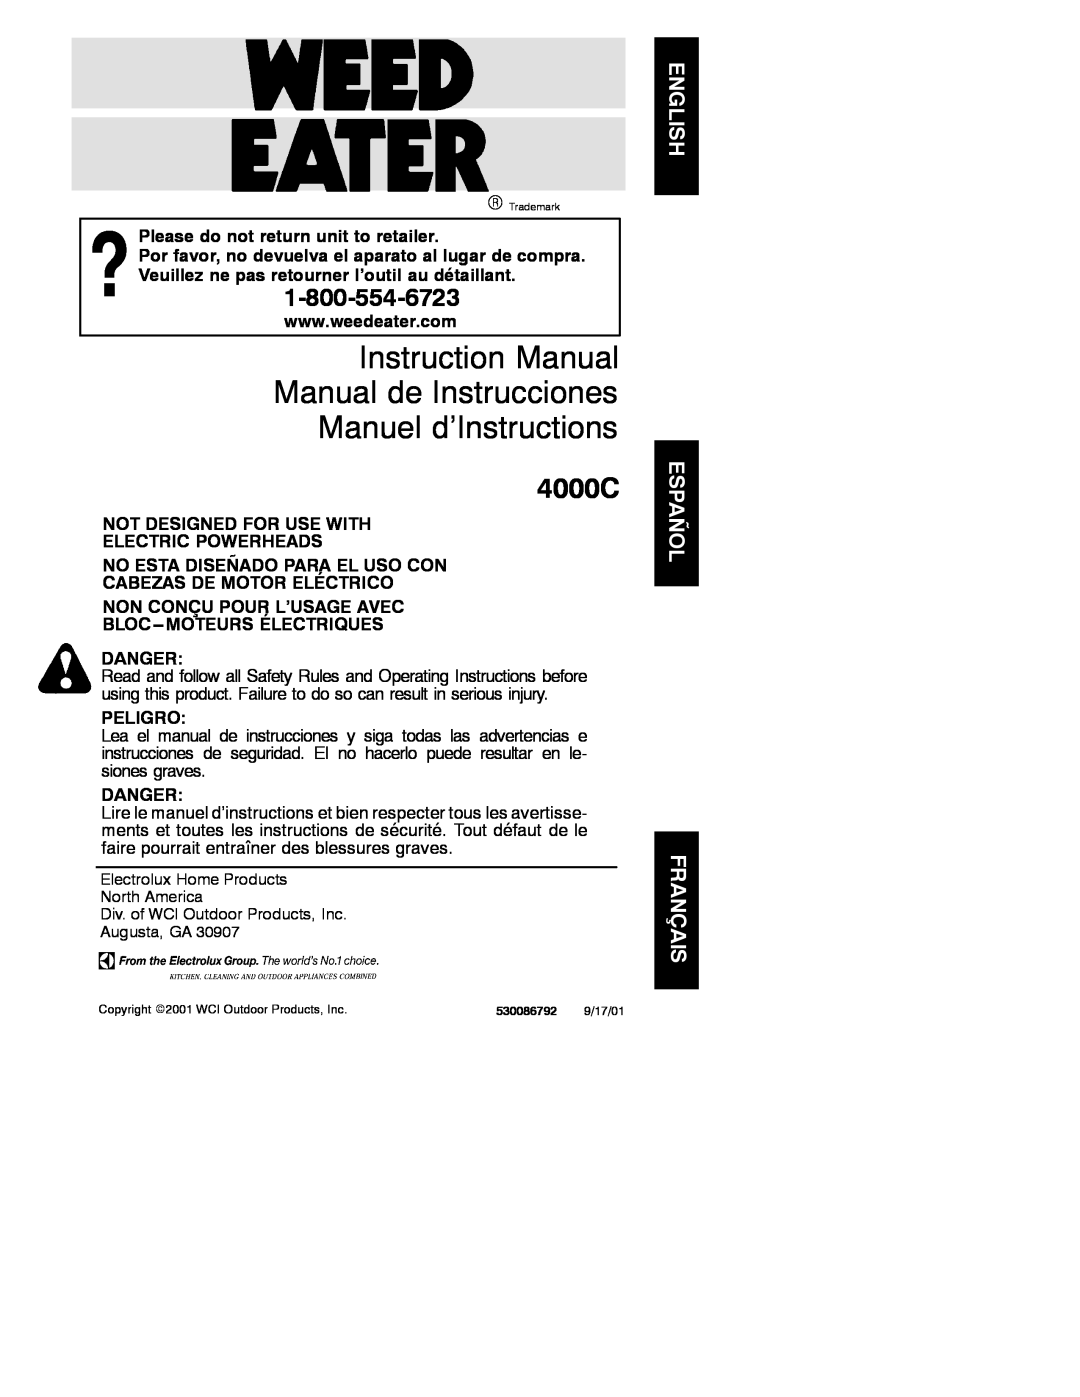 Weed Eater 4000C, 530086792 instruction manual Please do not return unit to retailer, Danger, Peligro 